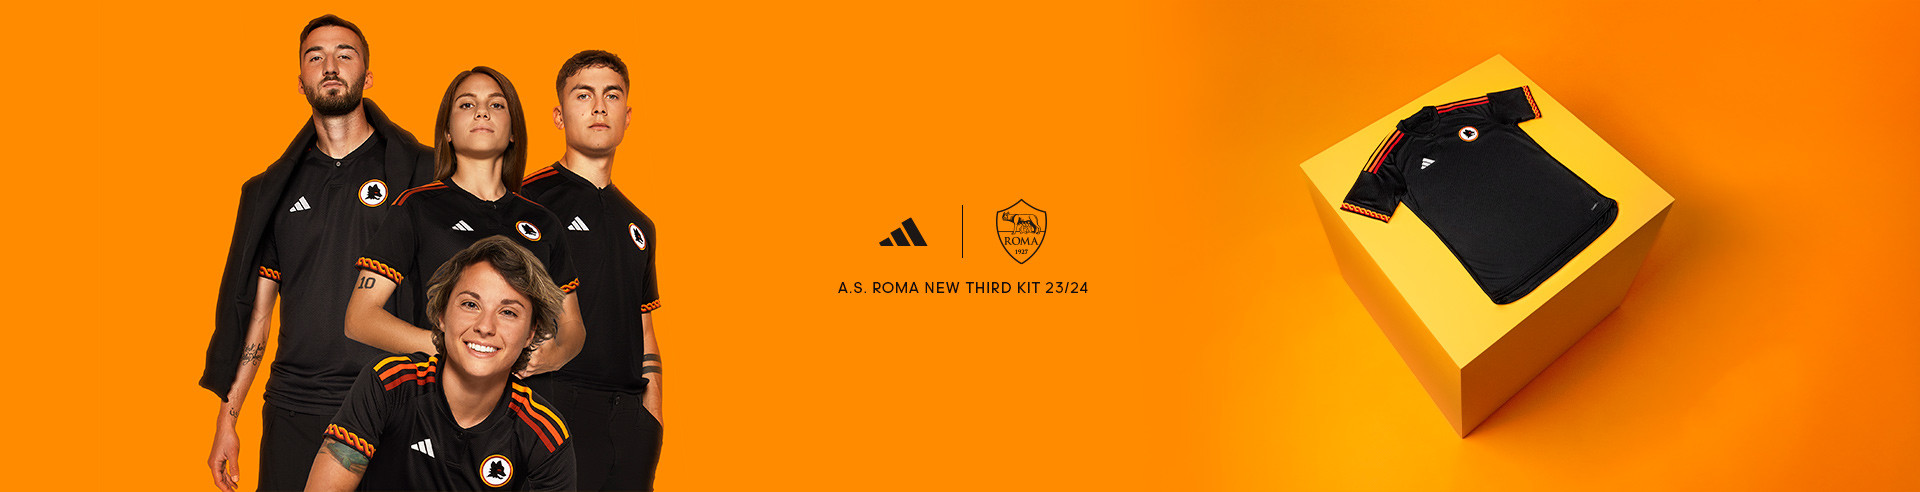 adidas roma third kit 23 24 all